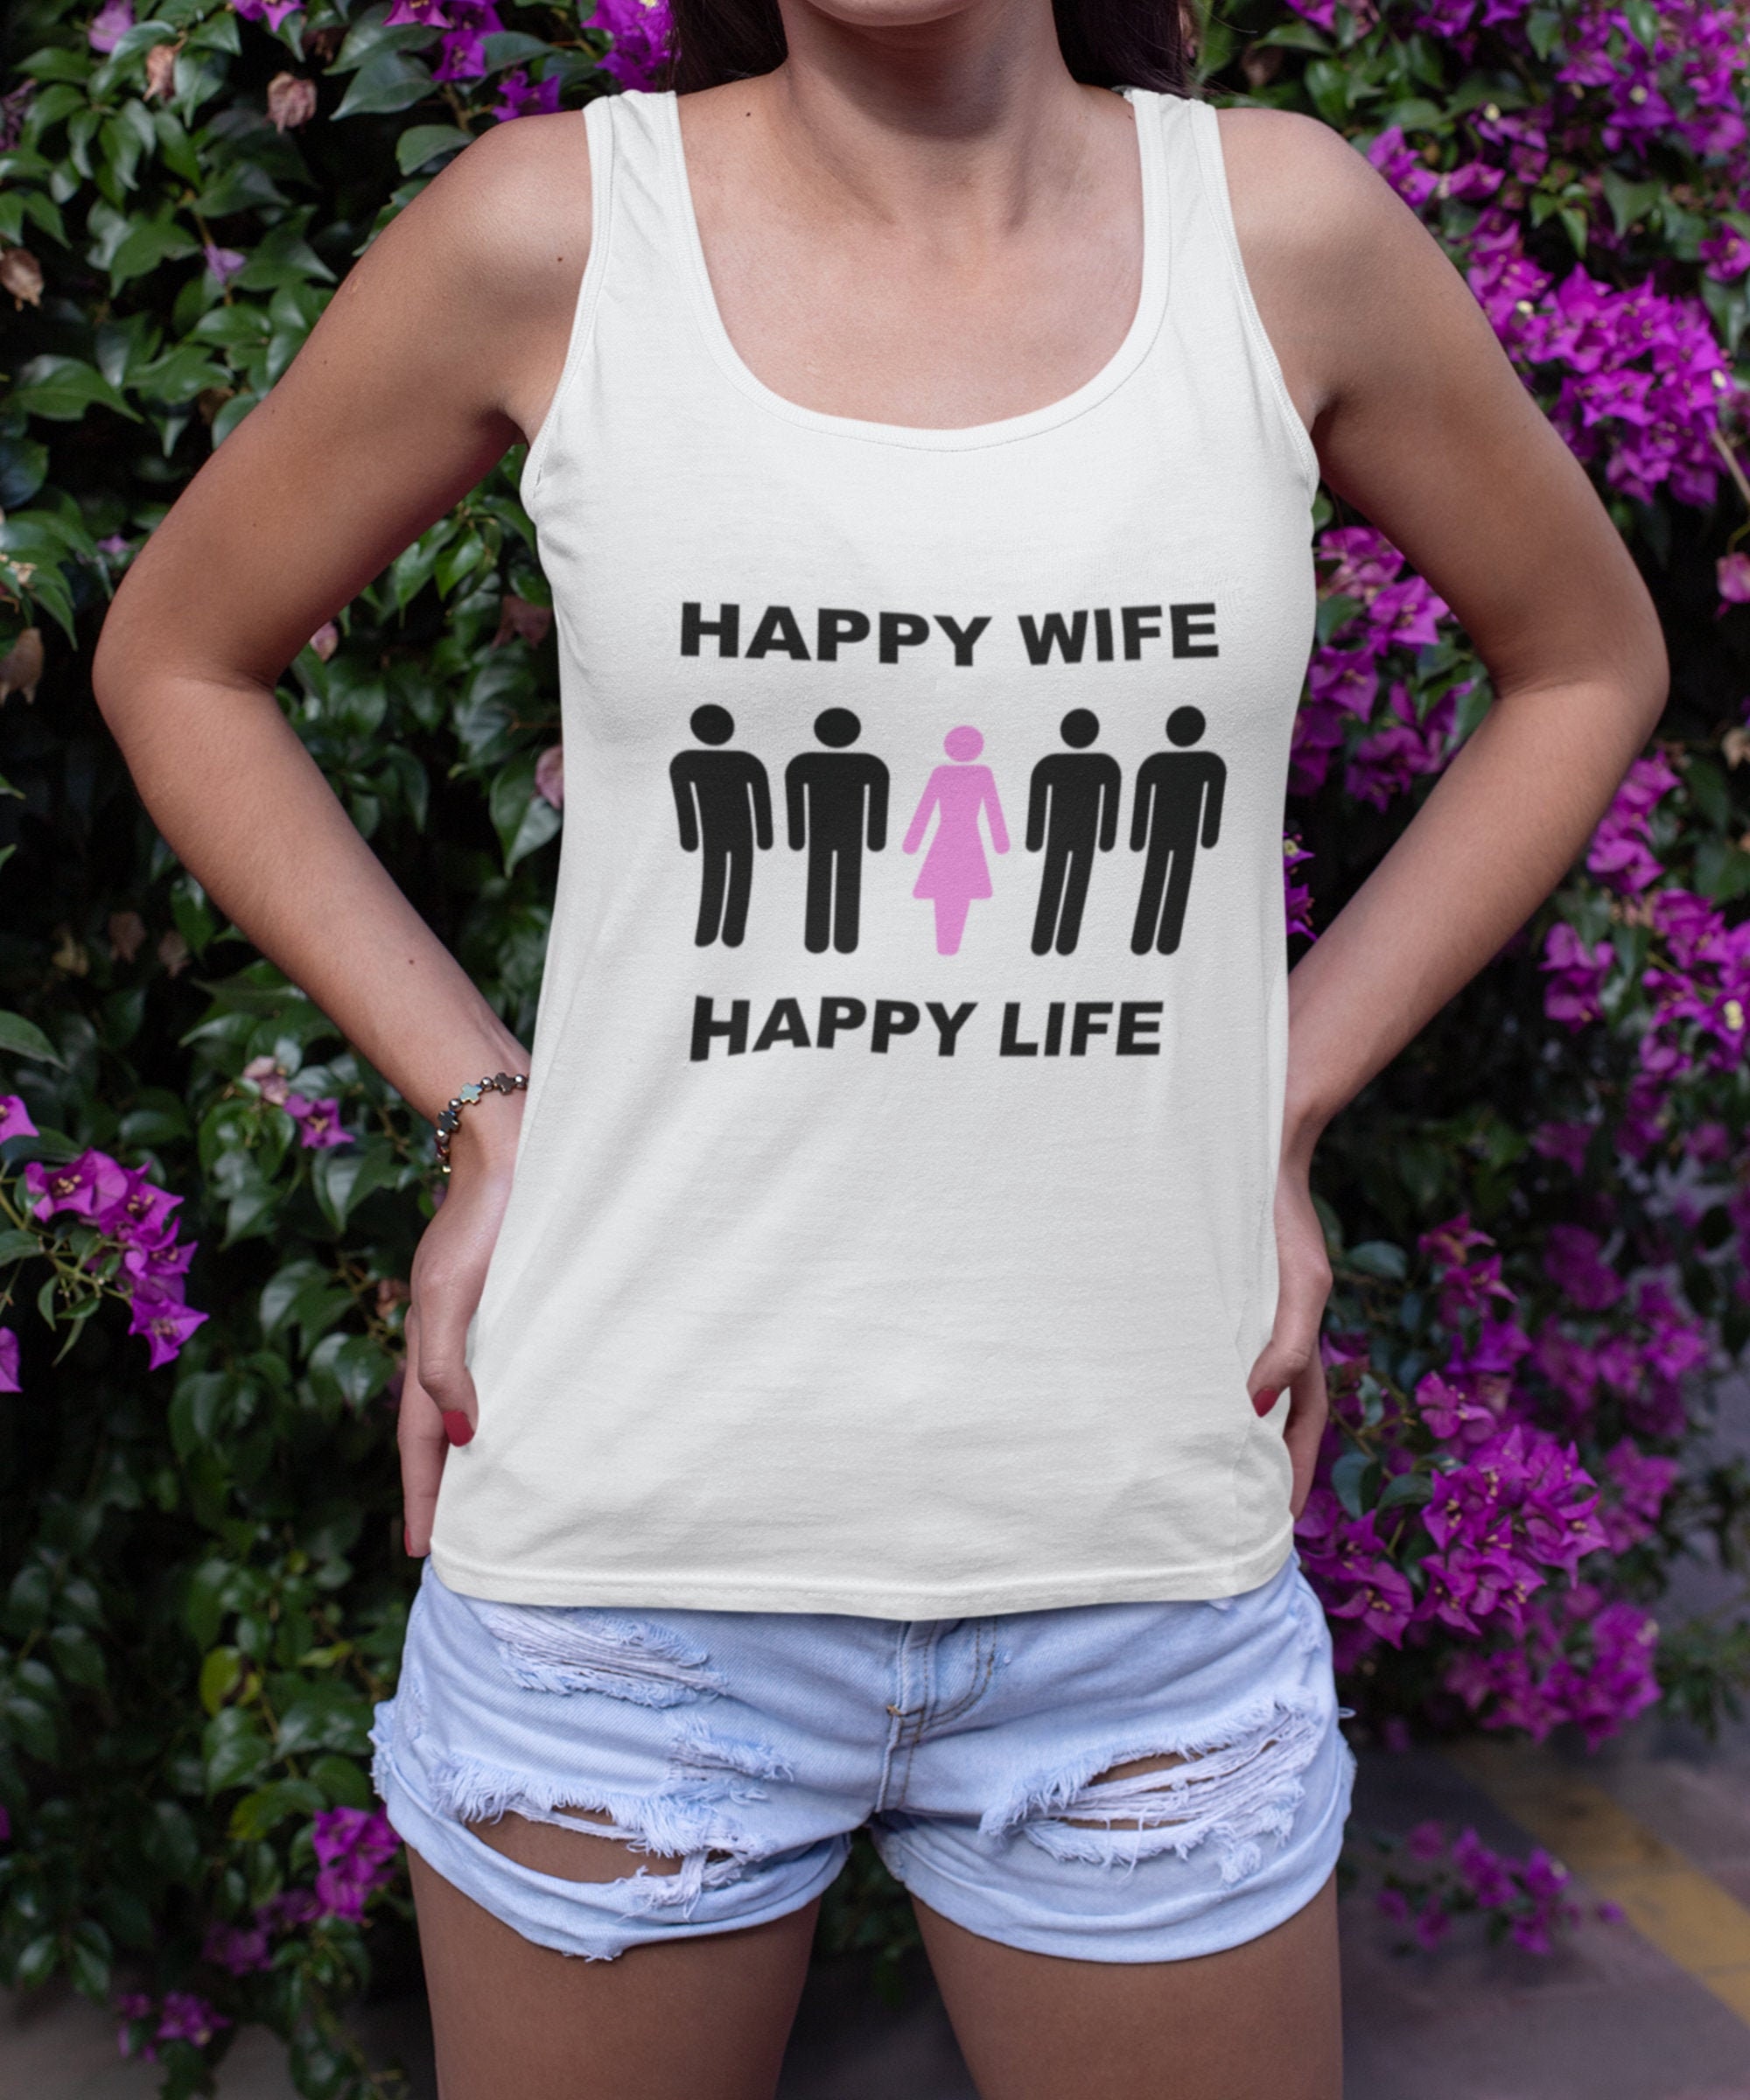 Hotwife Clothing Gangbang Shirt Tank Top Happy Wife Happy